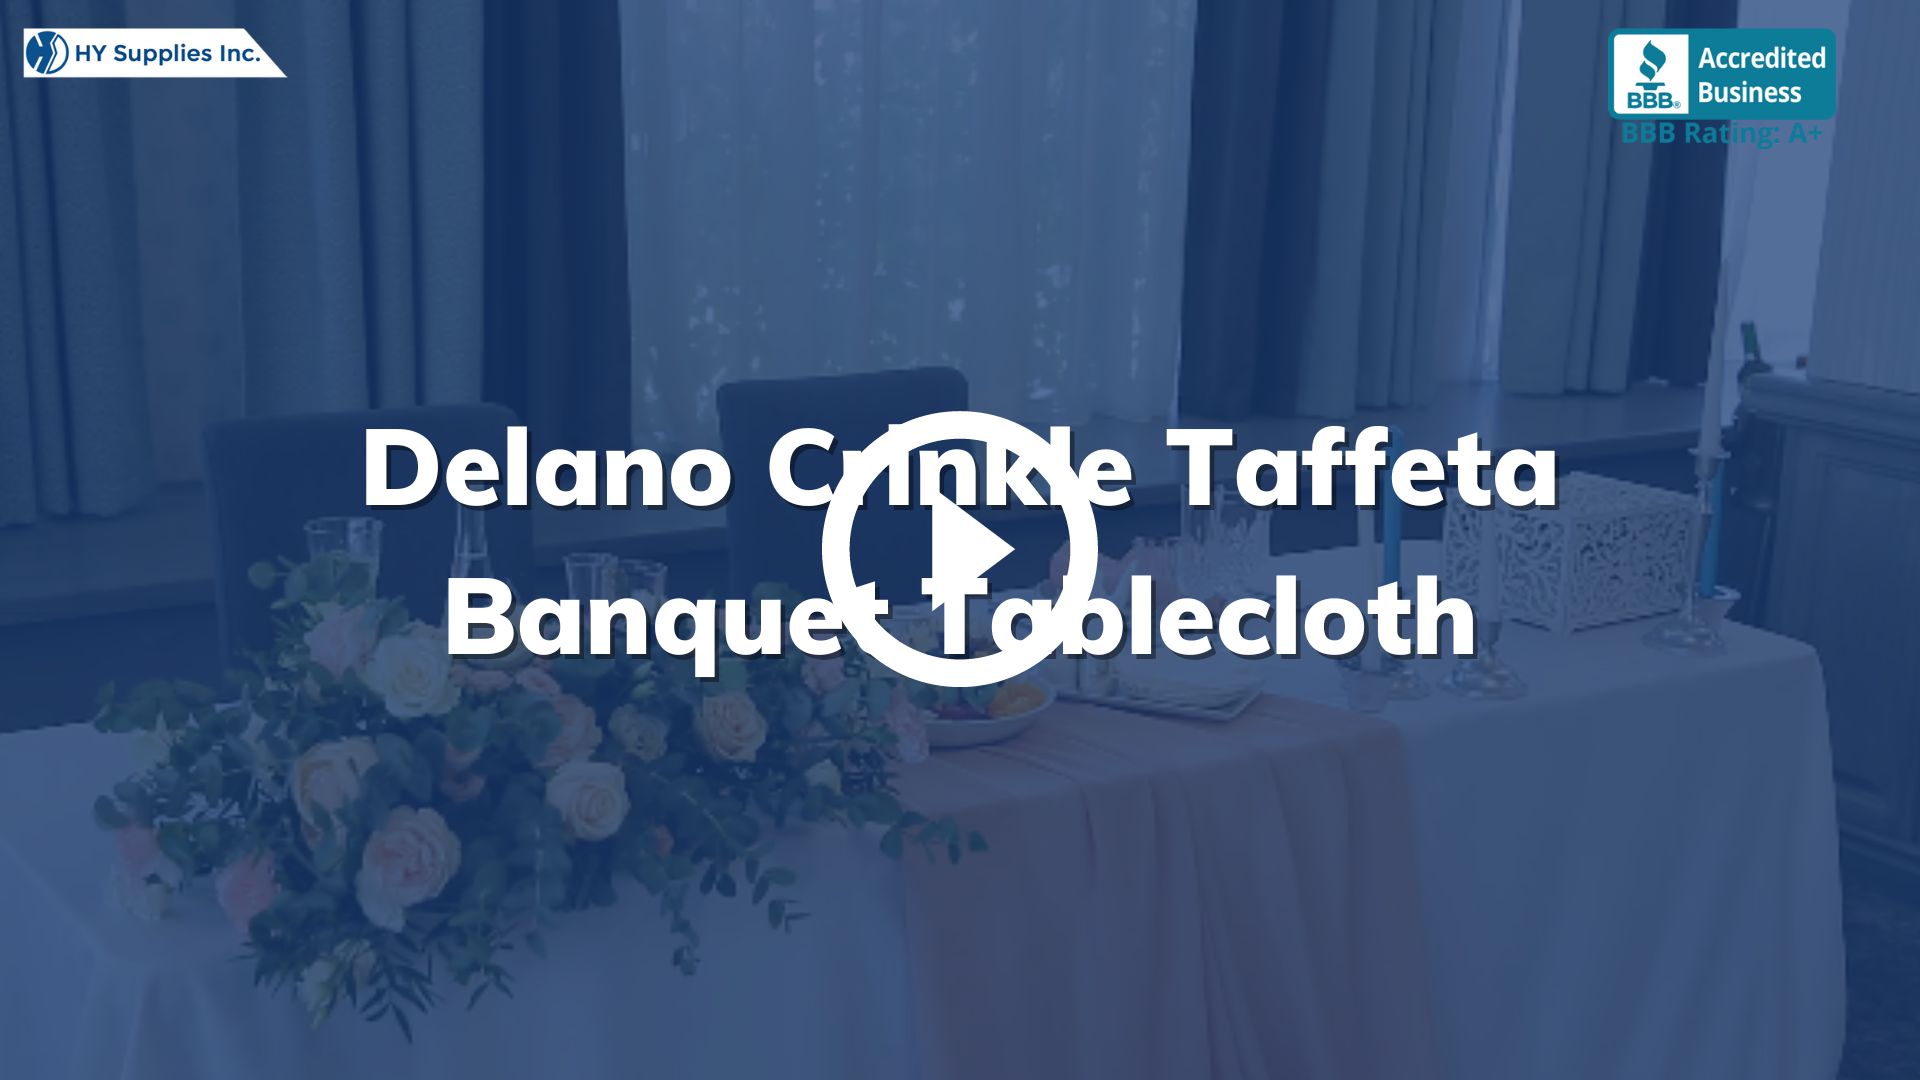 Delano Crinkle Taffeta Banquet Tablecloth